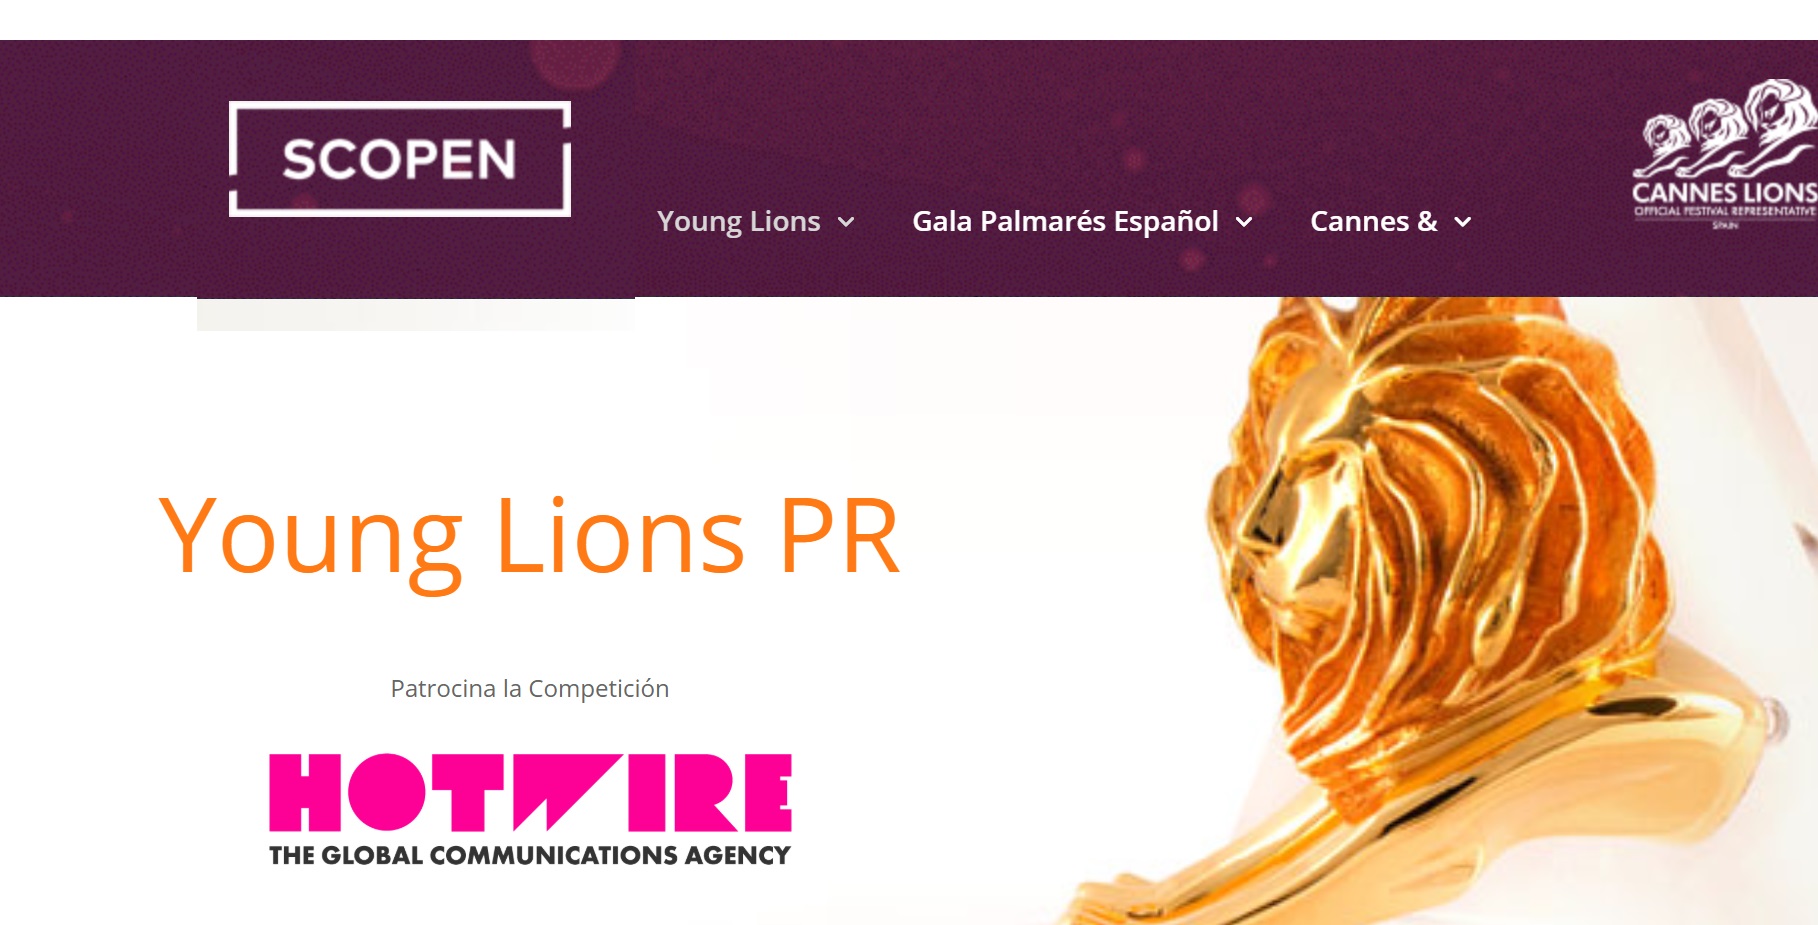 Young Lions PR scopen, hotwire, programapublicidad,